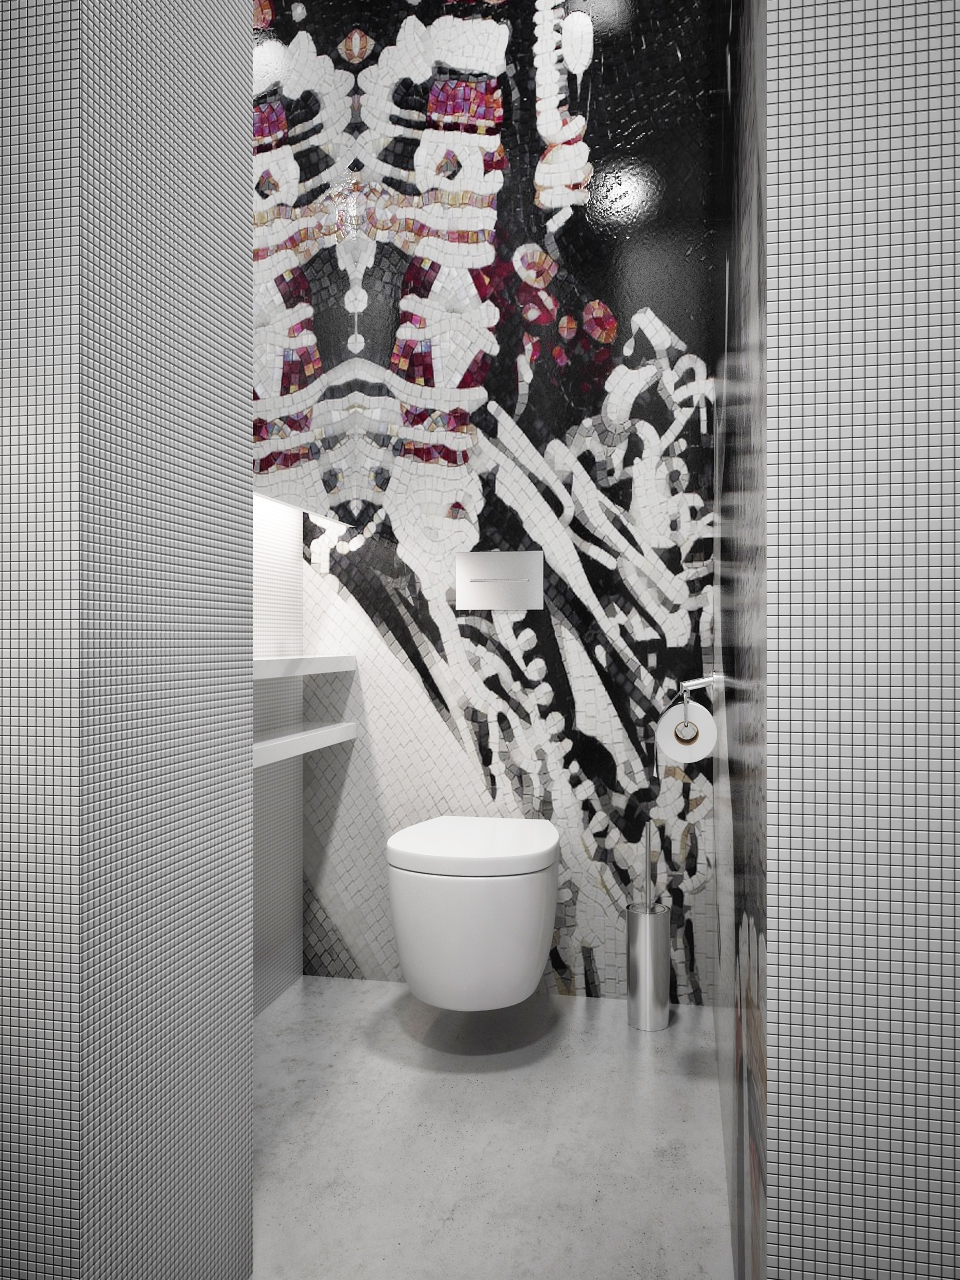 Bathroom mosaic tiles "width =" 960 "height =" 1280 "srcset =" https://mileray.com/wp-content/uploads/2020/05/1588516411_647_Minimalist-Bathroom-Designs-With-Wall-Texture-Decor-Which-Looks-So.jpeg 960w, https : //mileray.com/wp-content/uploads/2016/09/Mosaic-tile-bathroom-Azovskiy-Pahomova-Architects-225x300.jpeg 225w, https://mileray.com/wp-content/uploads/2016 / 09 / Mosaic-tile-bathroom-Azovskiy-Pahomova-Architects-768x1024.jpeg 768w, https://mileray.com/wp-content/uploads/2016/09/Mosaic-tile-bathroom-Azovskiy-Pahomova-Architects- 696x928 .jpeg 696w, https://mileray.com/wp-content/uploads/2016/09/Mosaic-tile-bathroom-Azovskiy-Pahomova-Architects-315x420.jpeg 315w "sizes =" (maximum width: 960px) 100vw, 960px